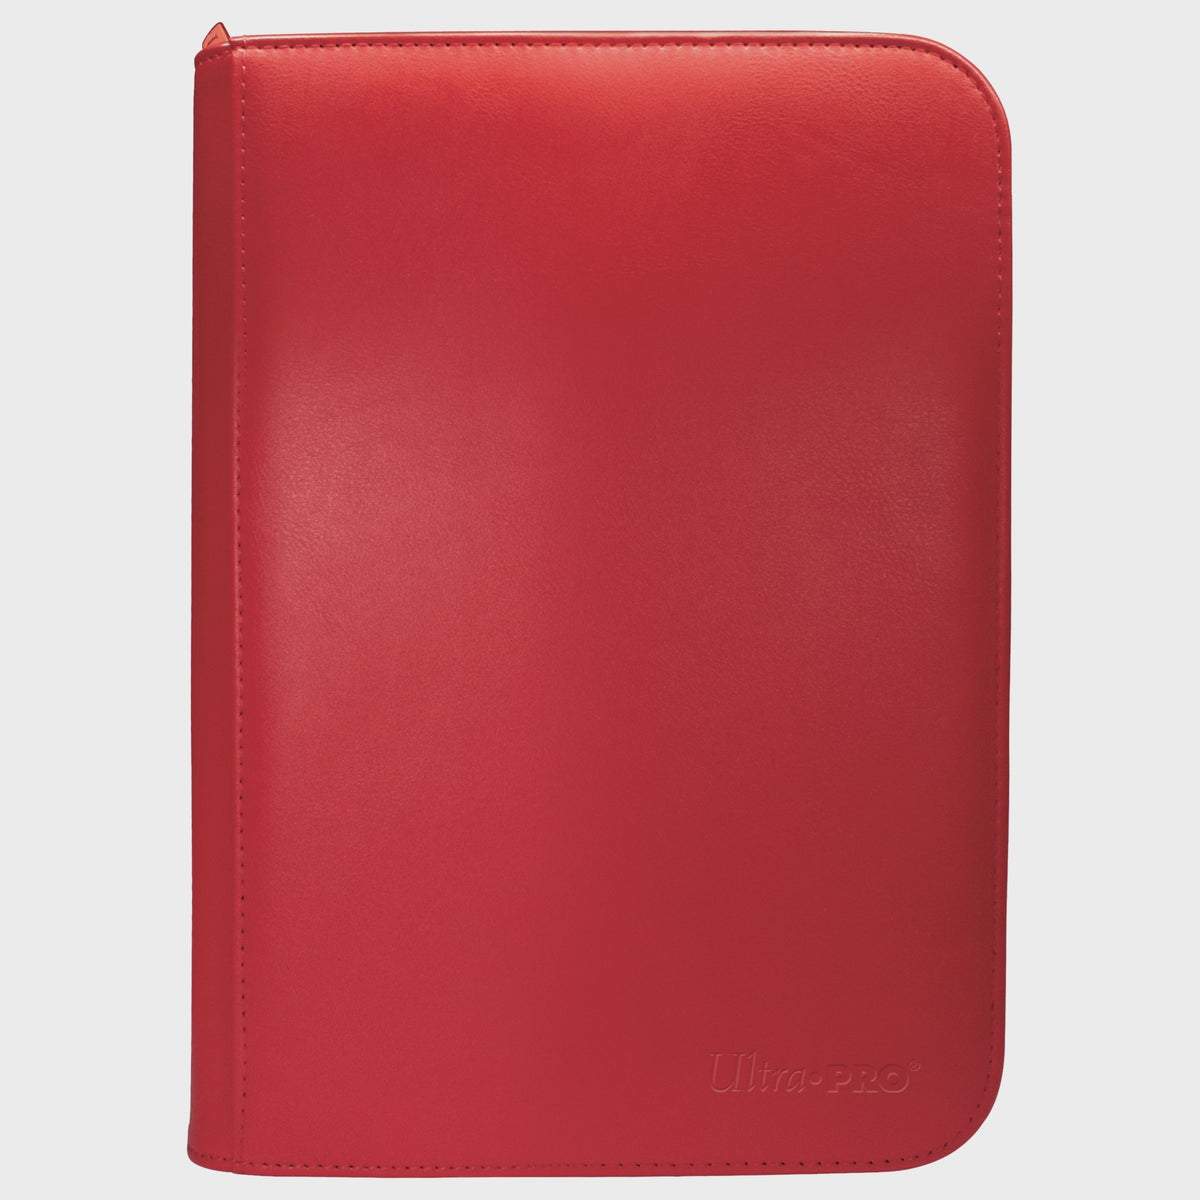 Ultra Pro Vivid 4-Pocket Zippered Pro-Binder: Red